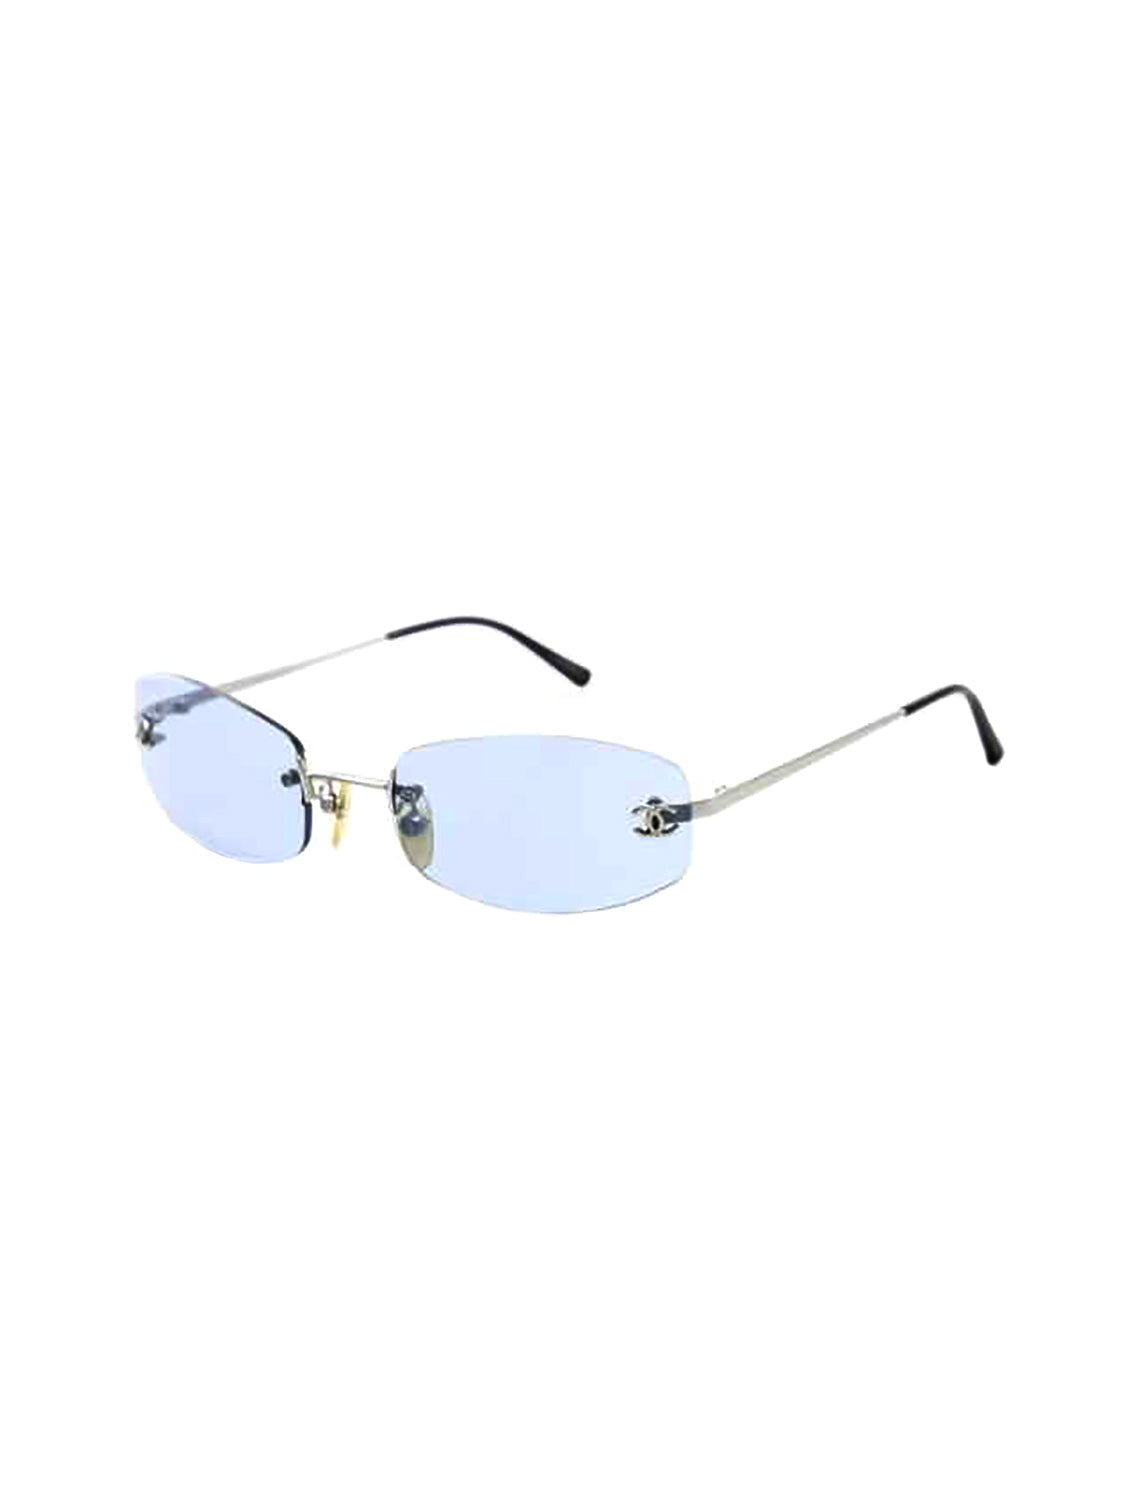 2000s Chanel Sunglasses - 2 For Sale on 1stDibs  vintage chanel sunglasses  2000s, chanel 2000s sunglasses, chanel iridescent sunglasses